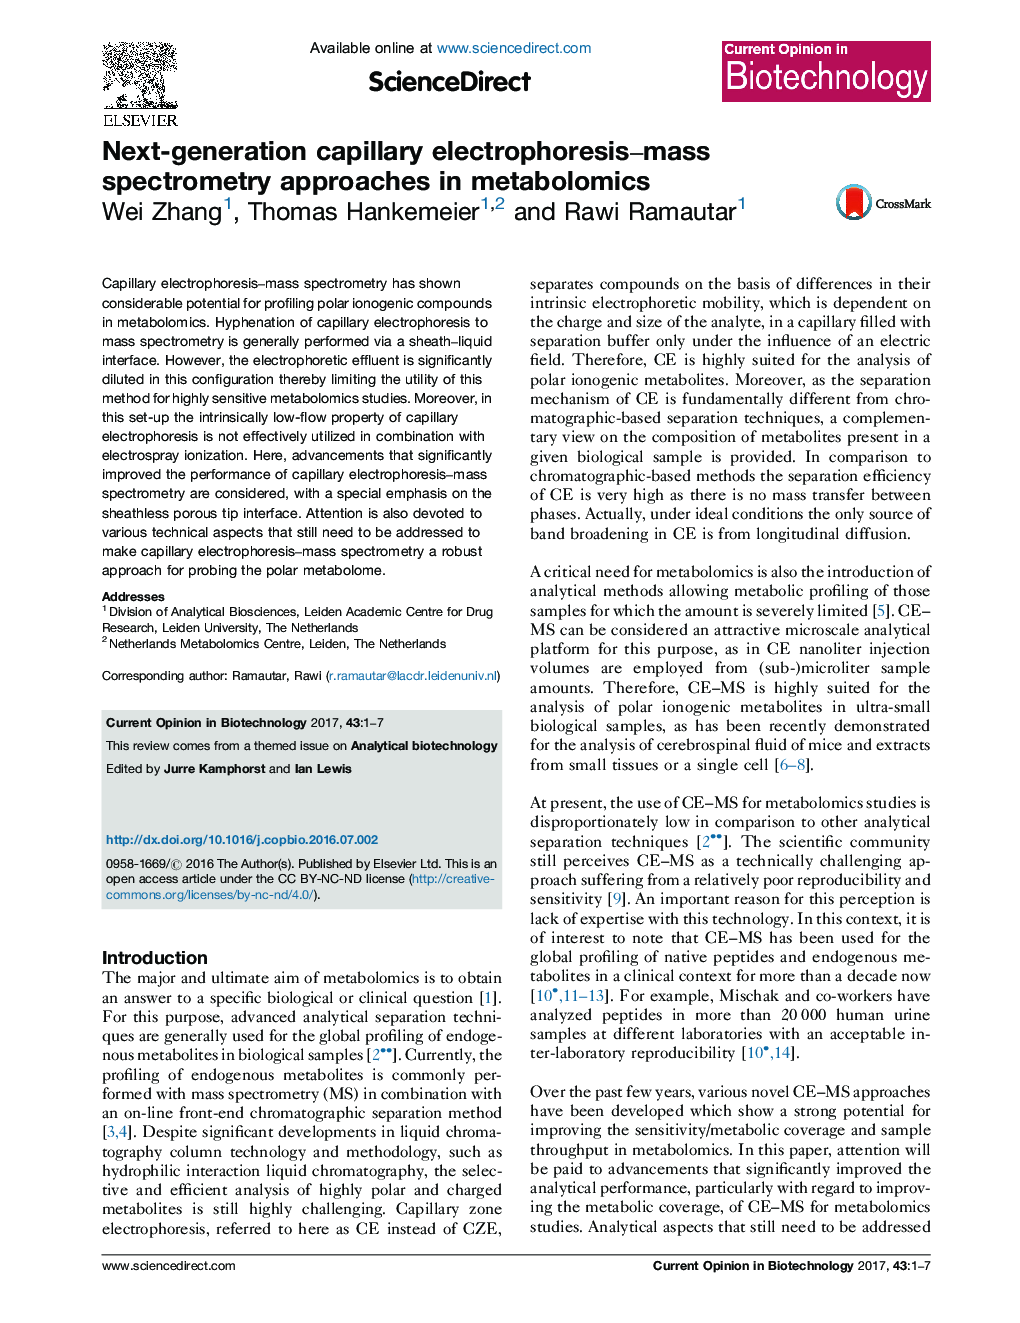 Next-generation capillary electrophoresis–mass spectrometry approaches in metabolomics